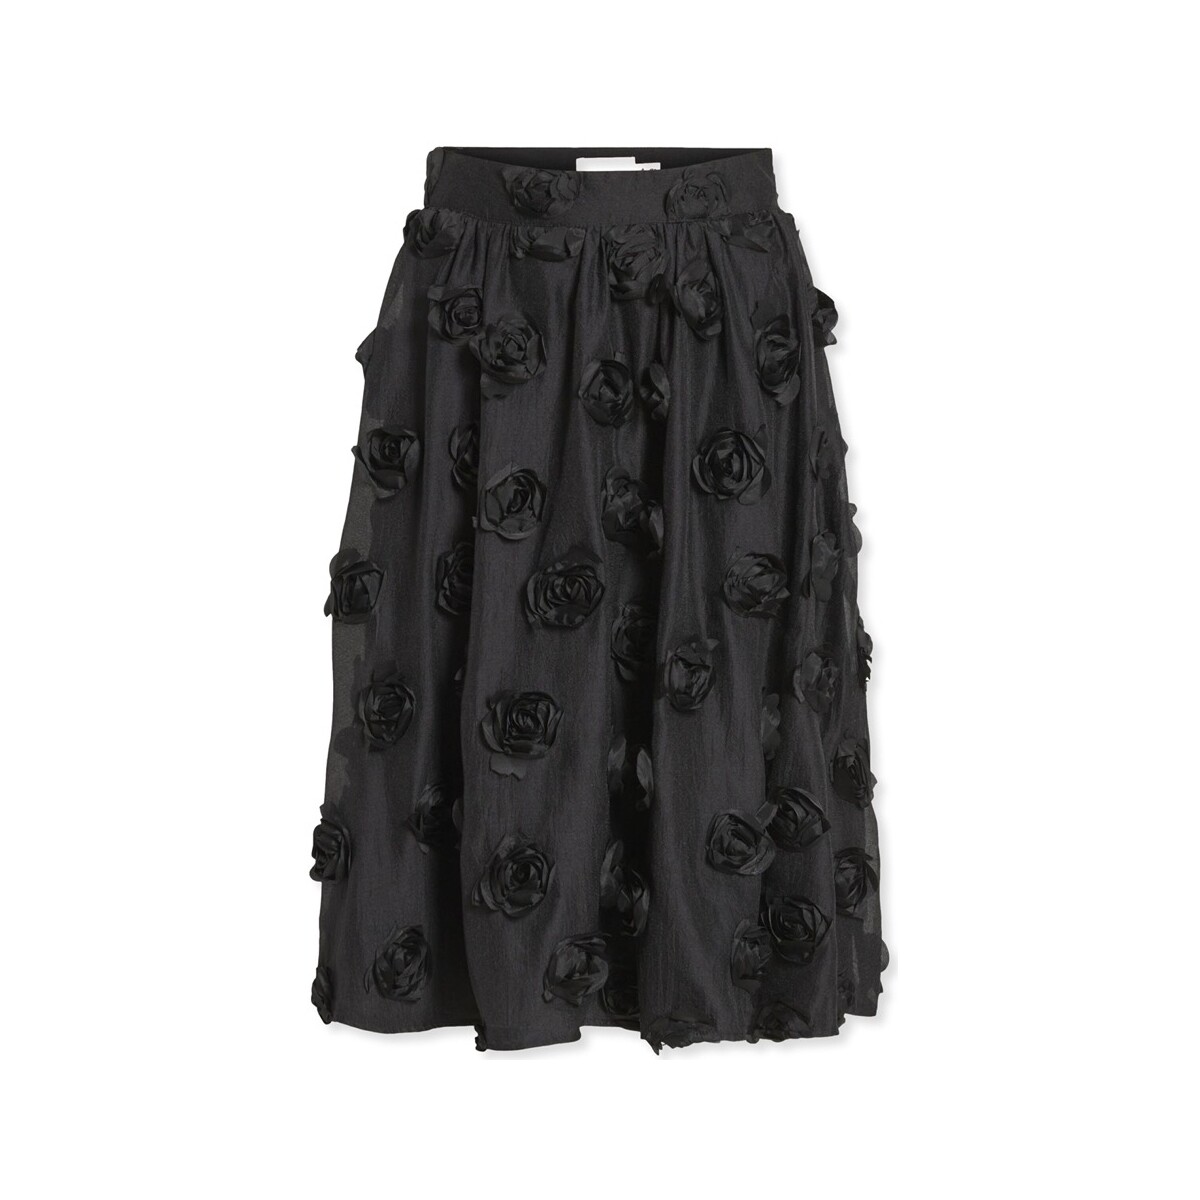 Textiel Dames Rokken Vila Flory Skirt L/S - Black Zwart